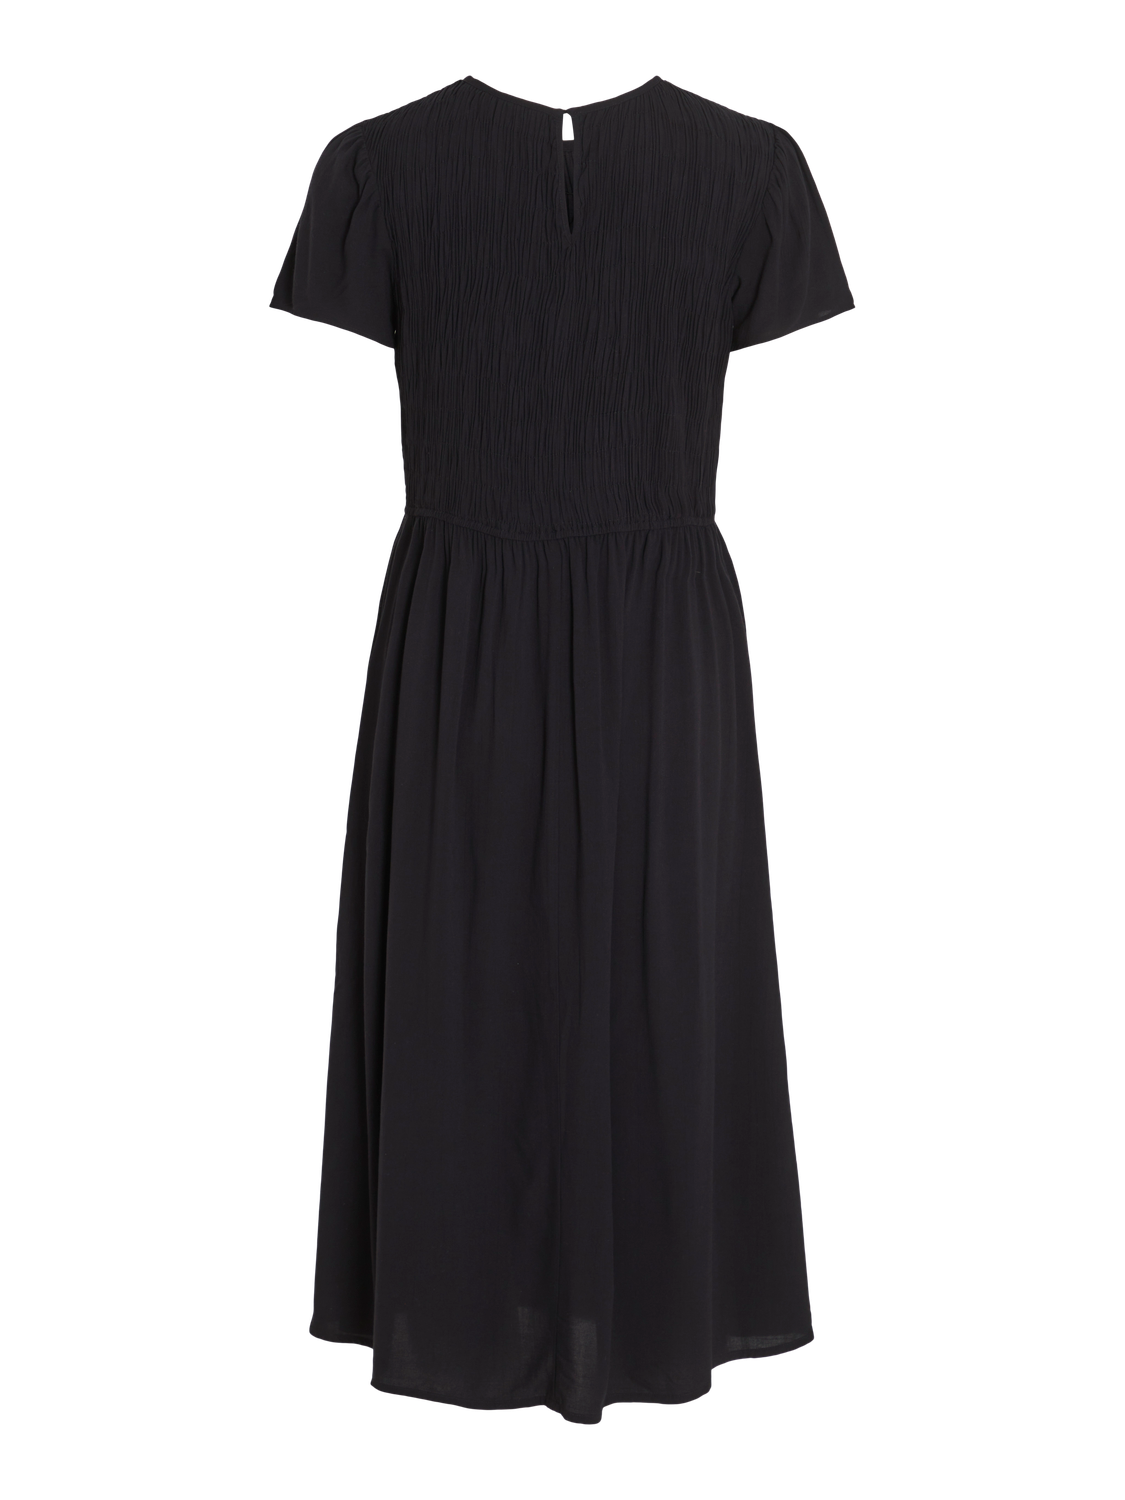 VITOMAS Dress - Black Beauty